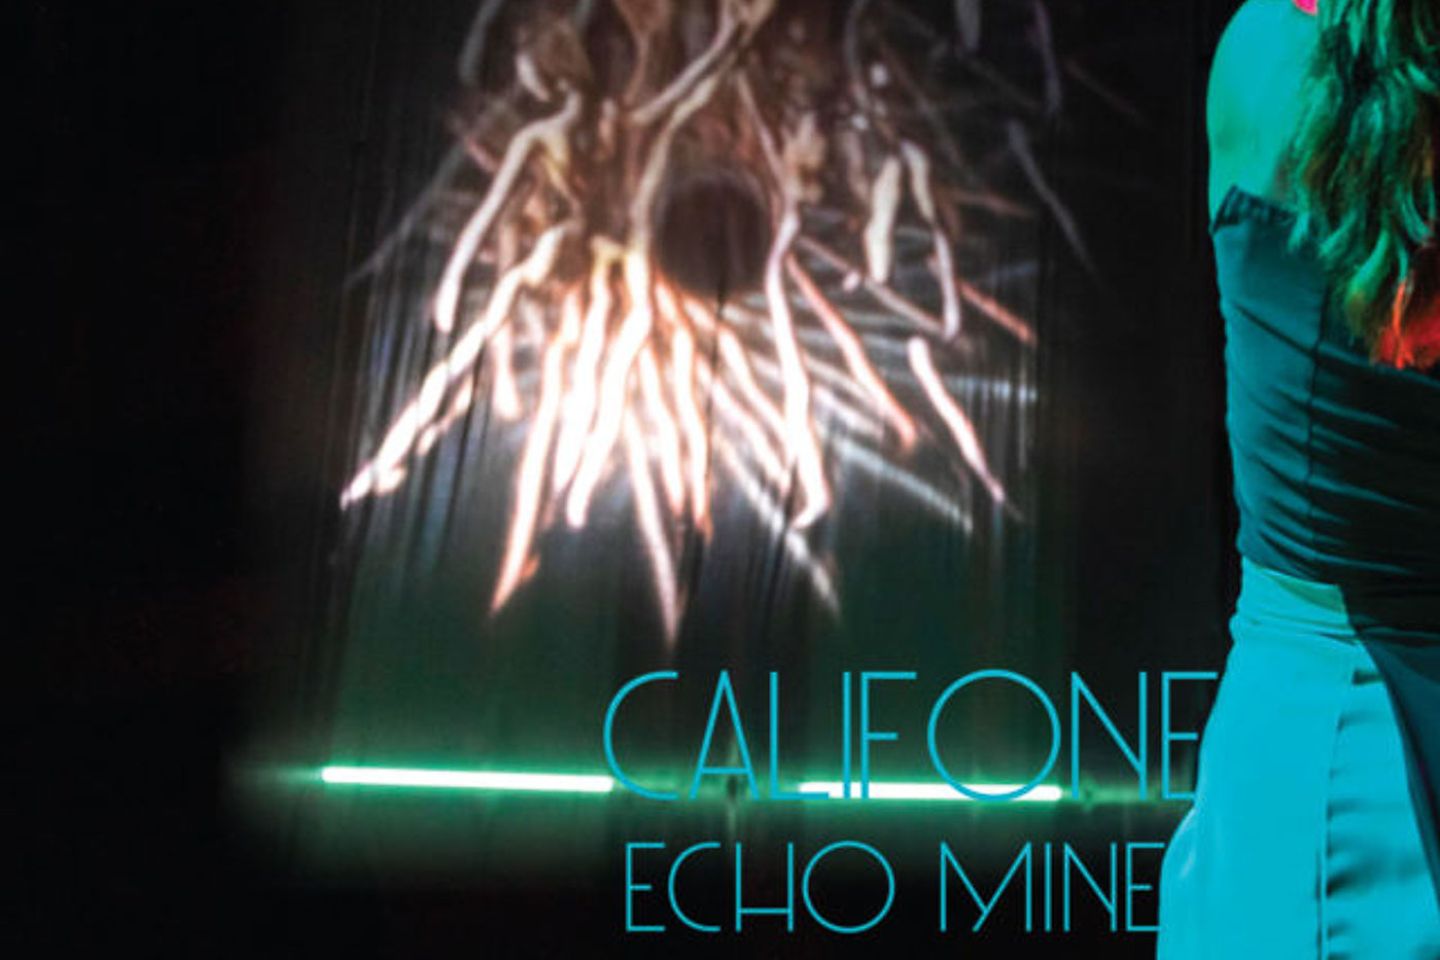 Califone “Echo Mine” (Jealous Butcher Records, 2020)